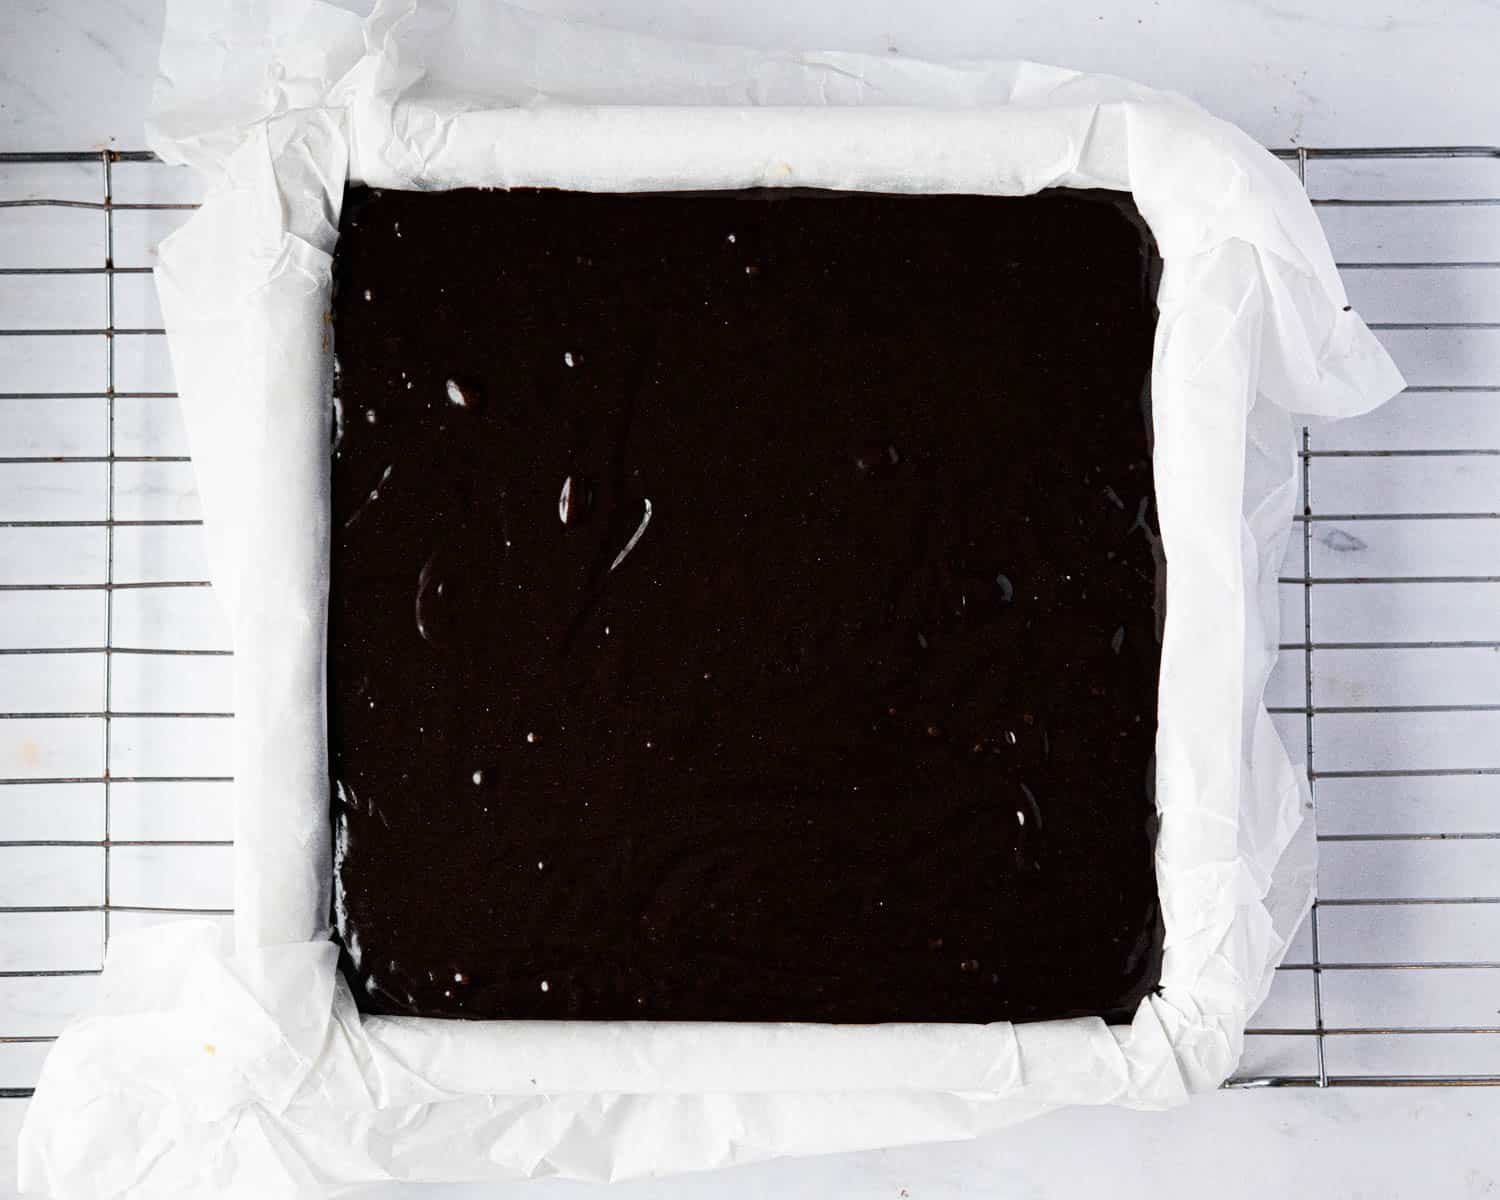 Step 8, the unbaked brownie.